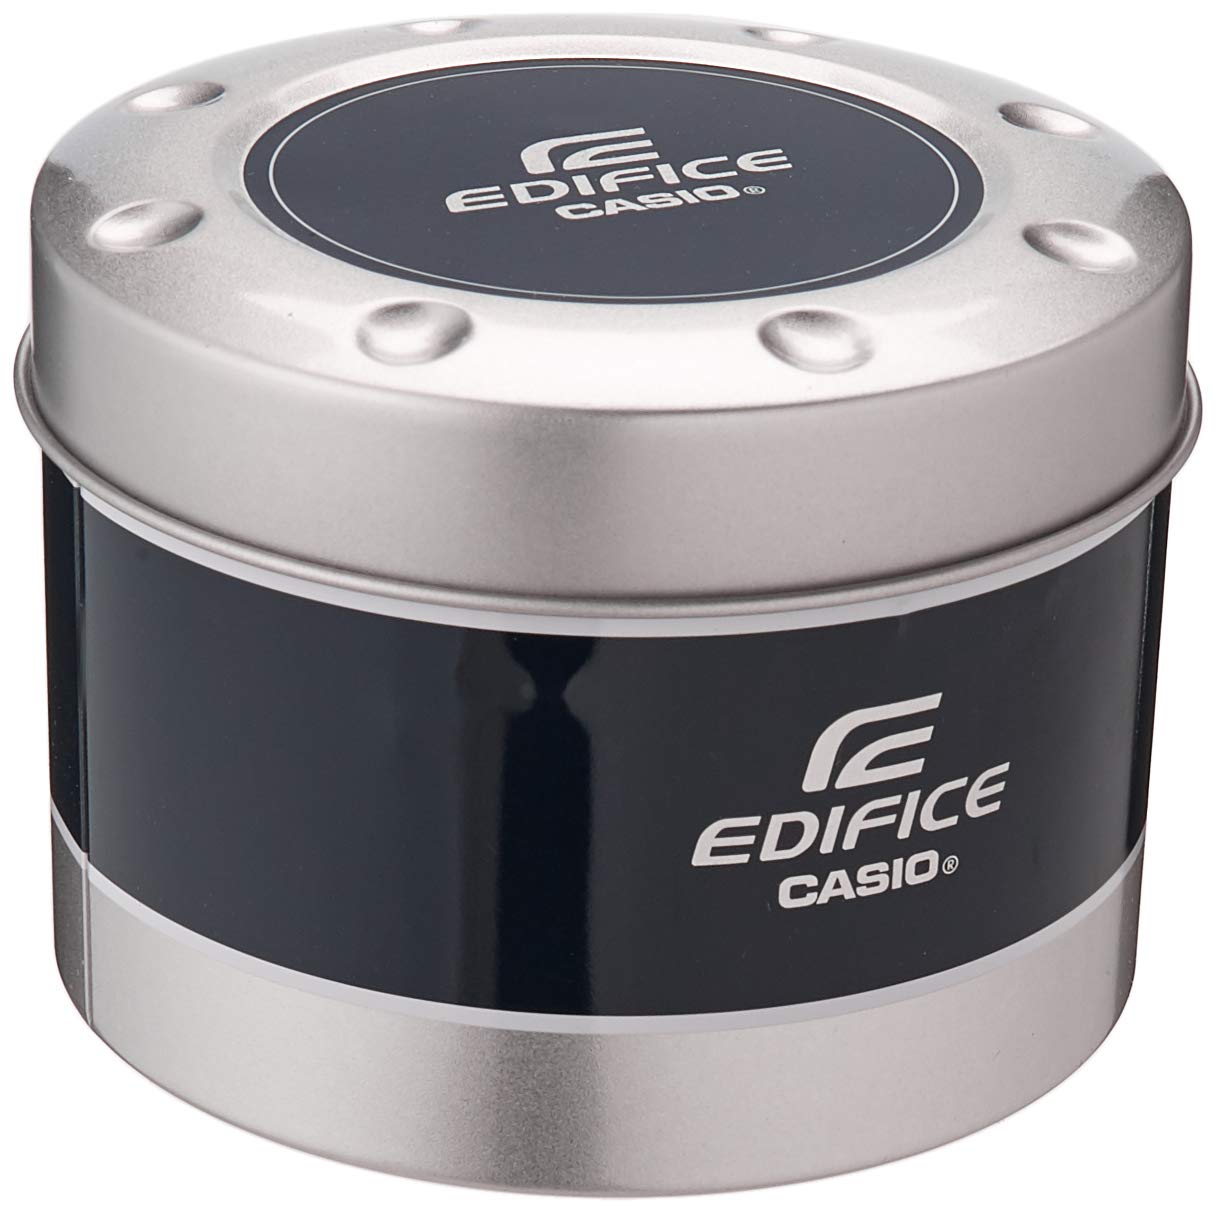 Casio Men's EFV-550D-7AVUDF Edifice Analog Display Quartz Silver Watch